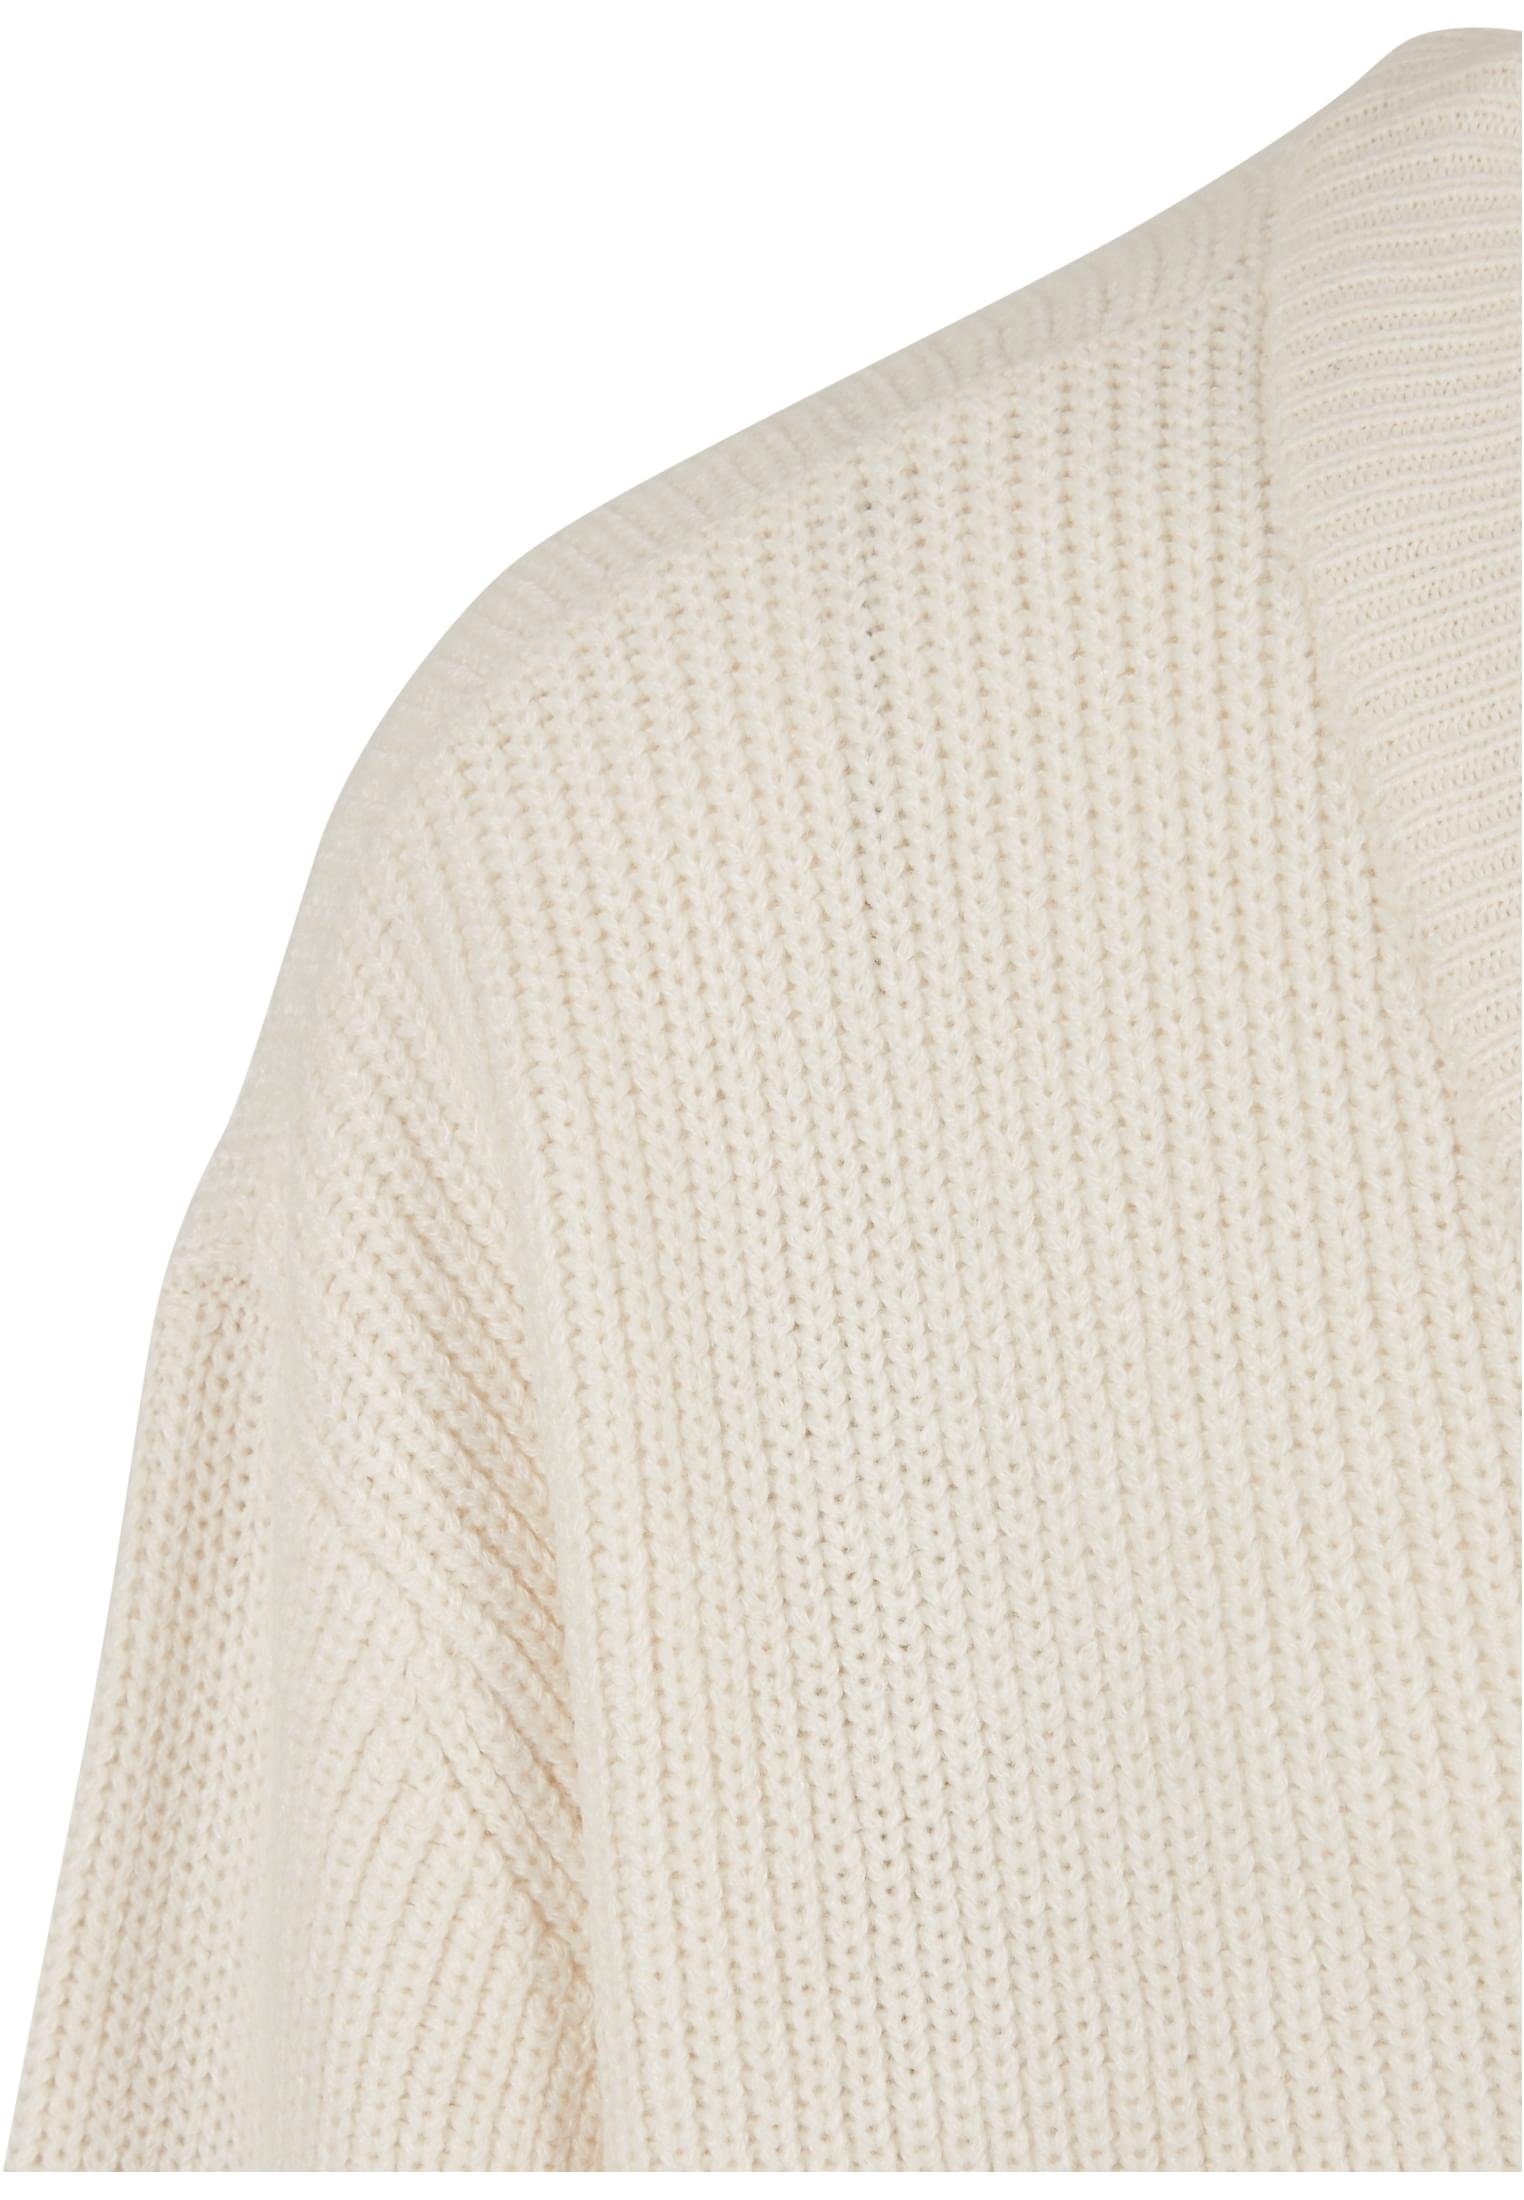 URBAN CLASSICS Strickjacke (1-tlg) whitesand Jacket Hooded Micro Herren Fleece